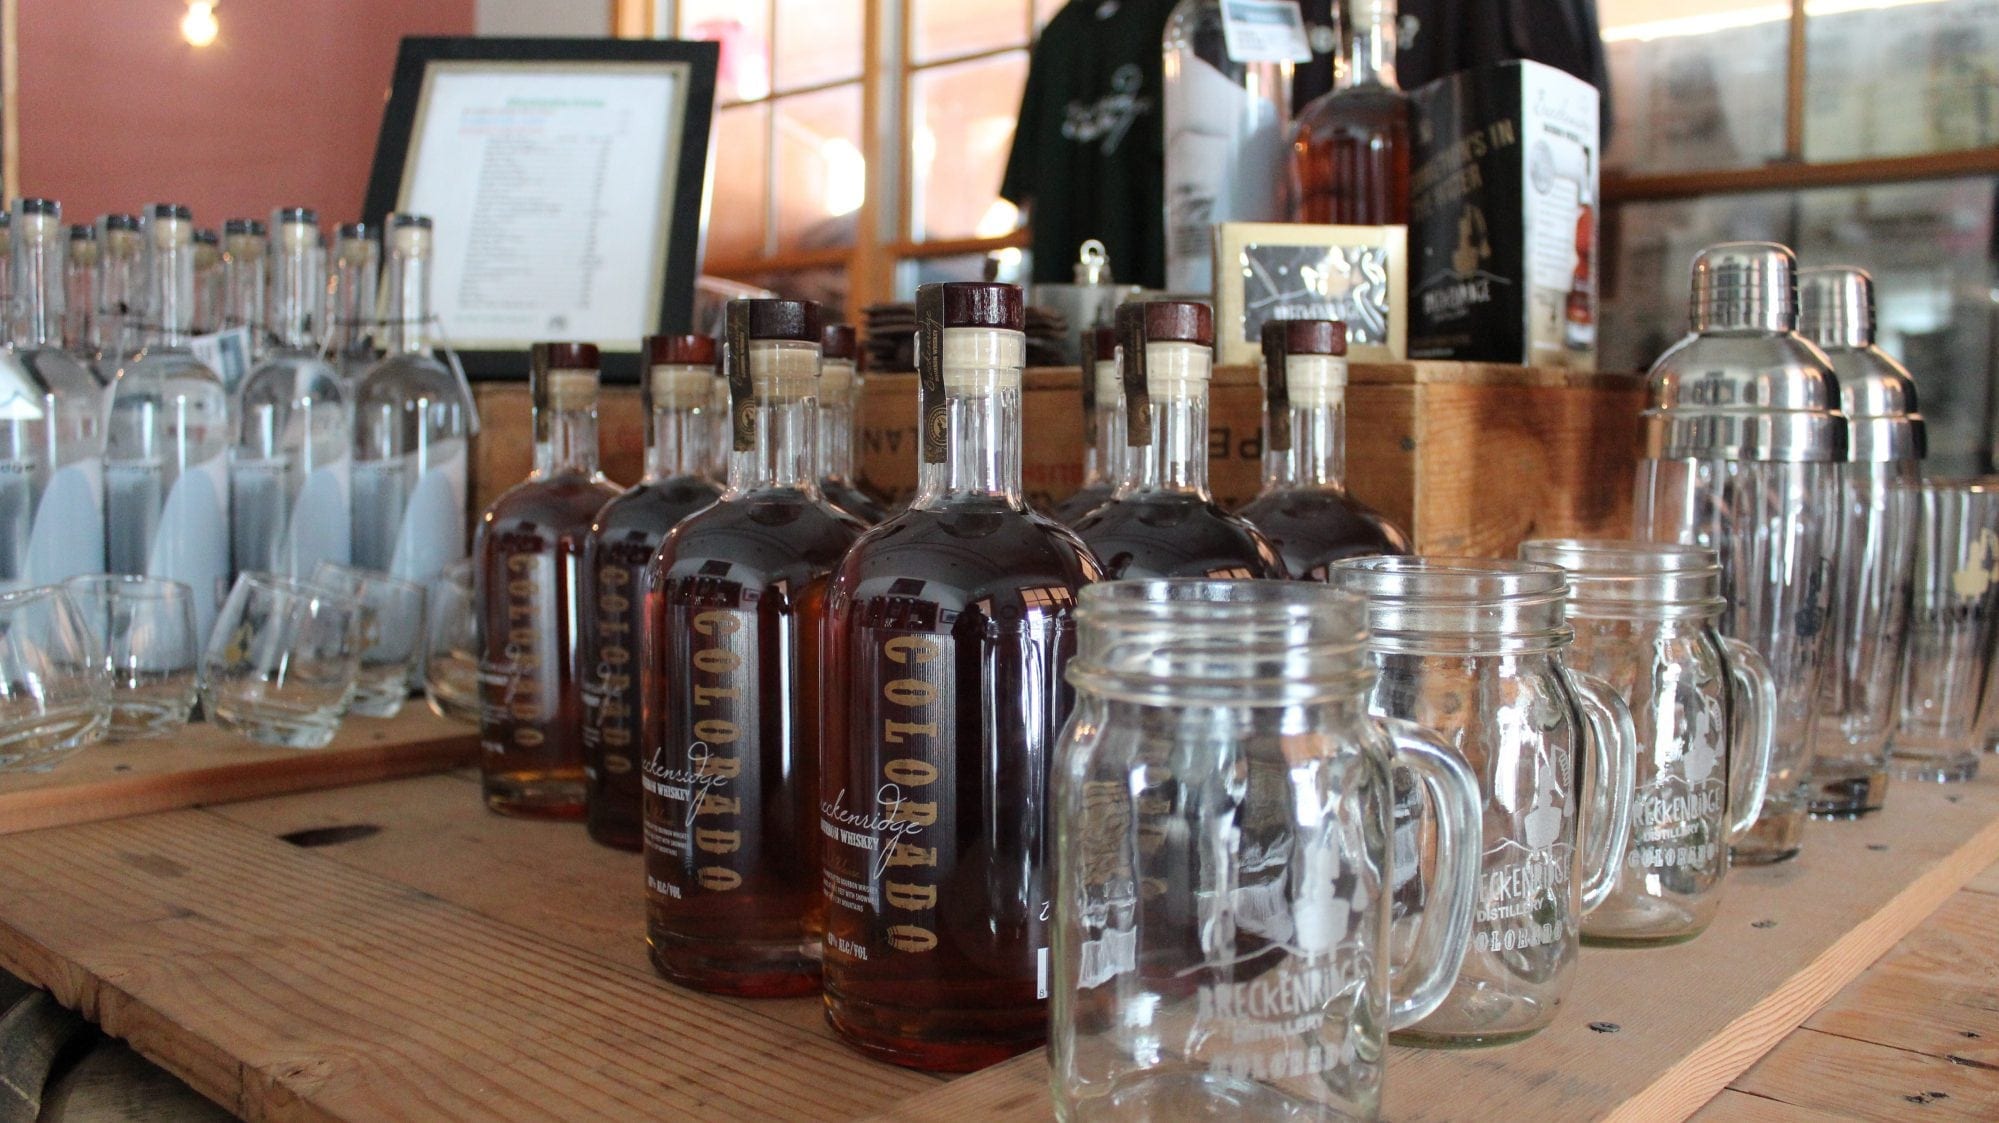 Bottles of bourbon from Breckenridge Distillery